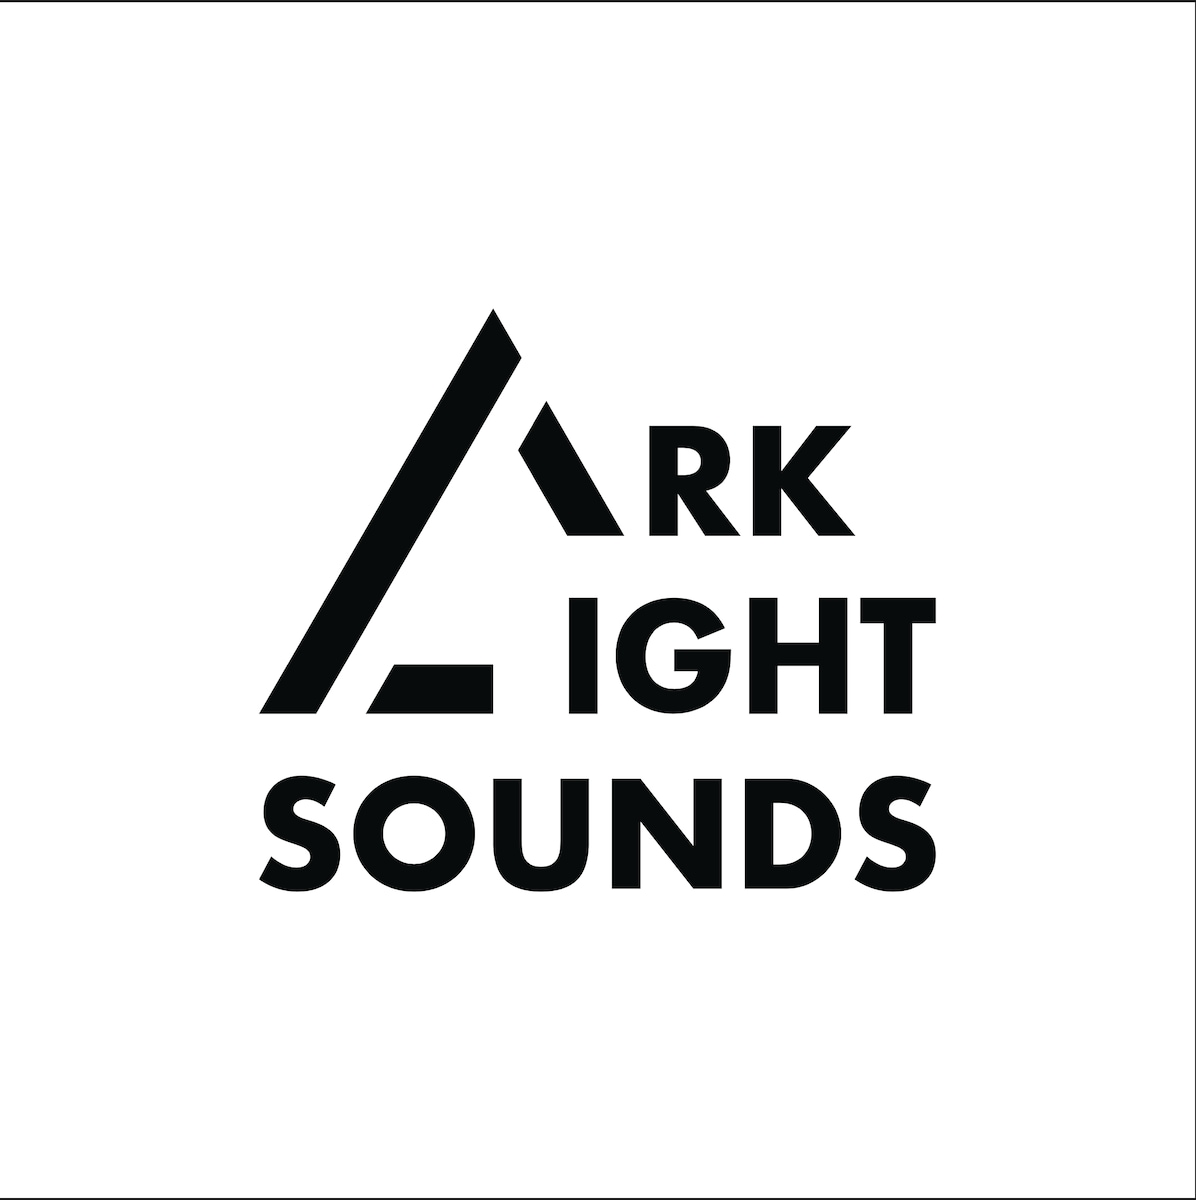 ARK LIGHT SOUNDS ロゴマーク